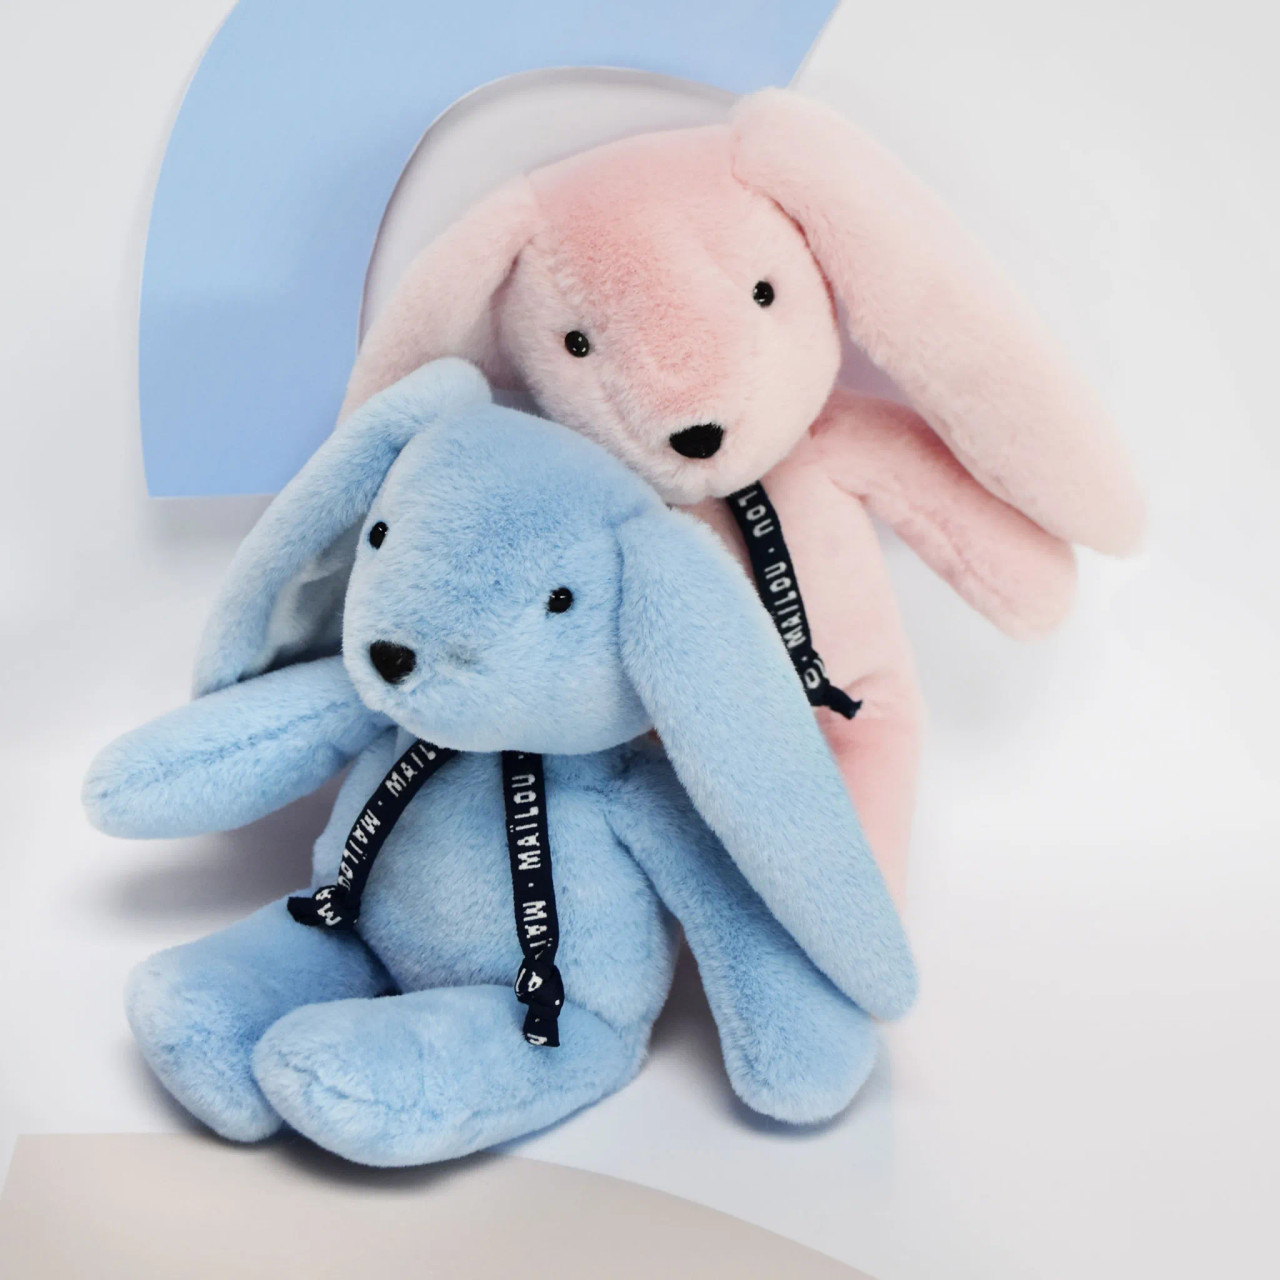 With Little Pink Rabbit, Little Rabbit Plush Toy  23cm, Blue Dorlotin, Mailou Tradition France